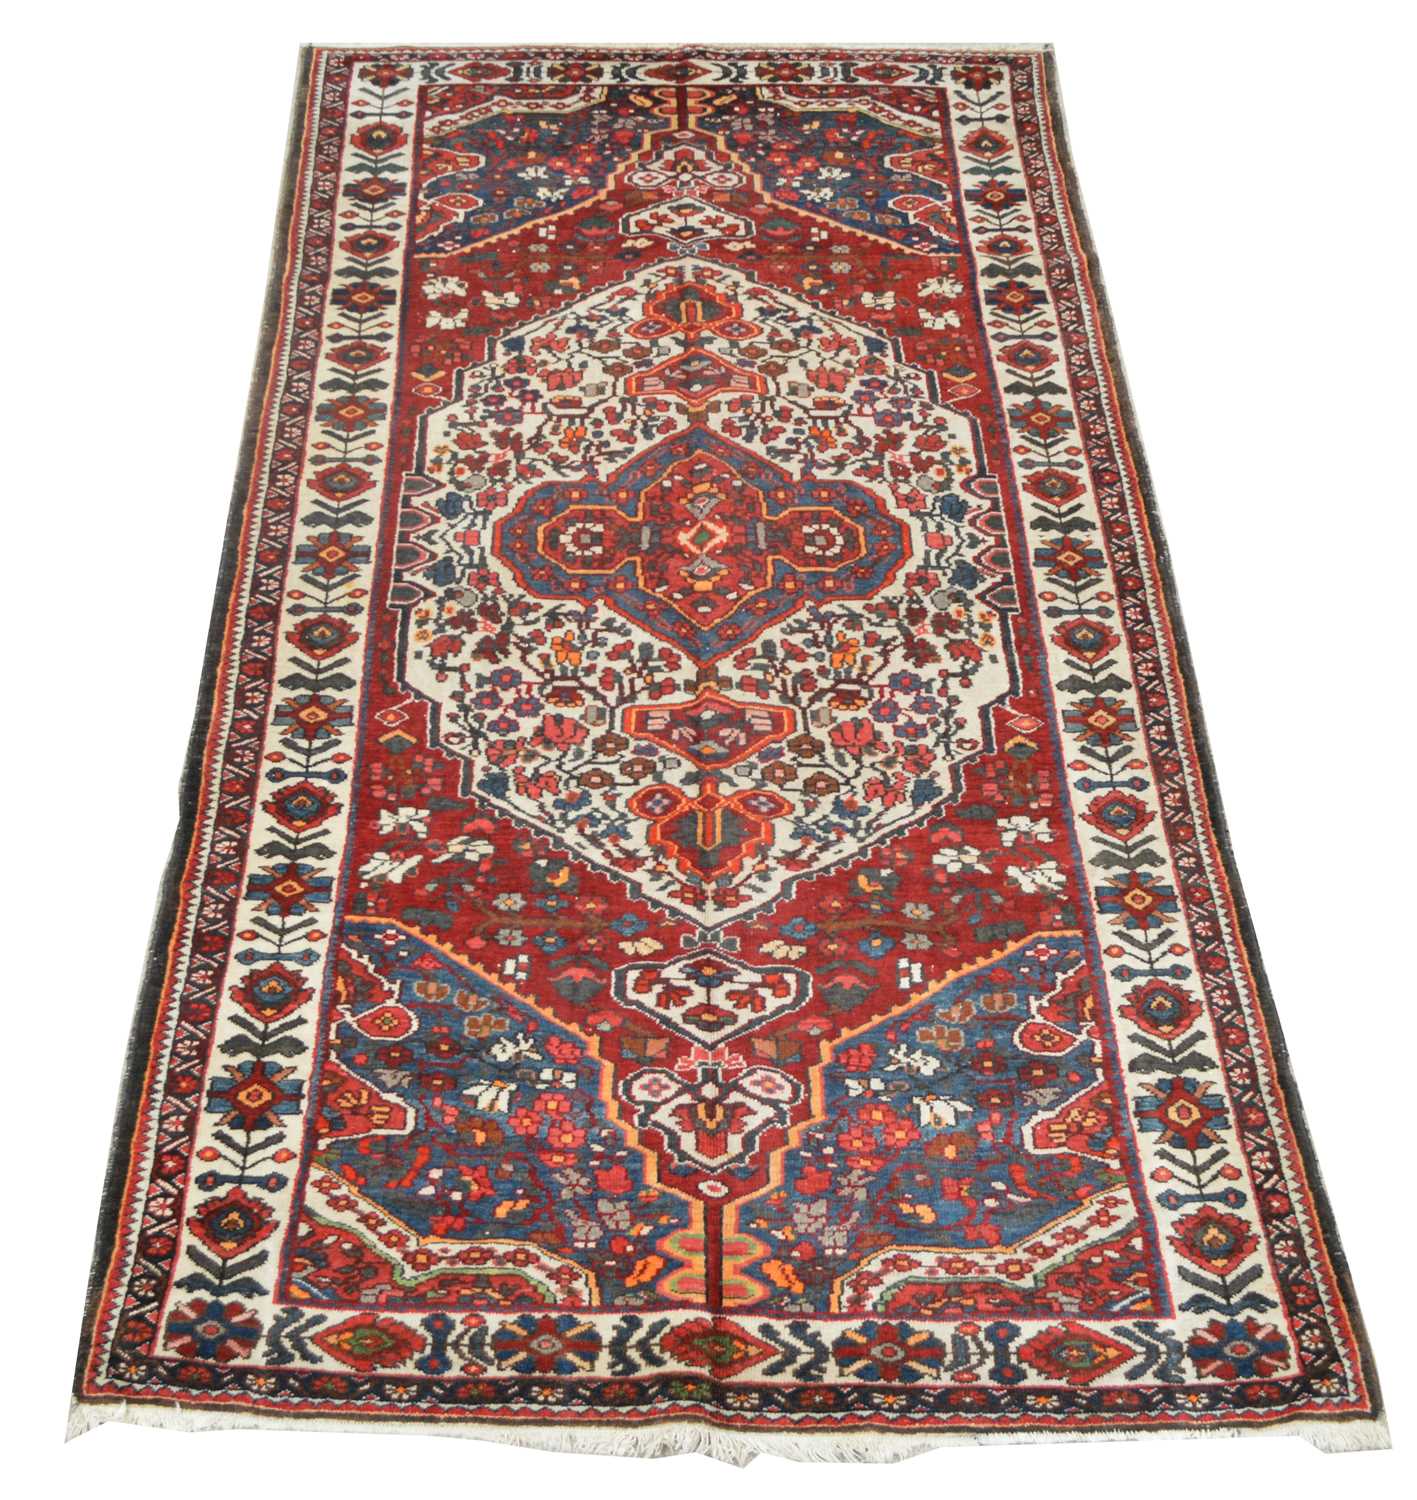 Lot 642 - Antique Bakhtiari carpet